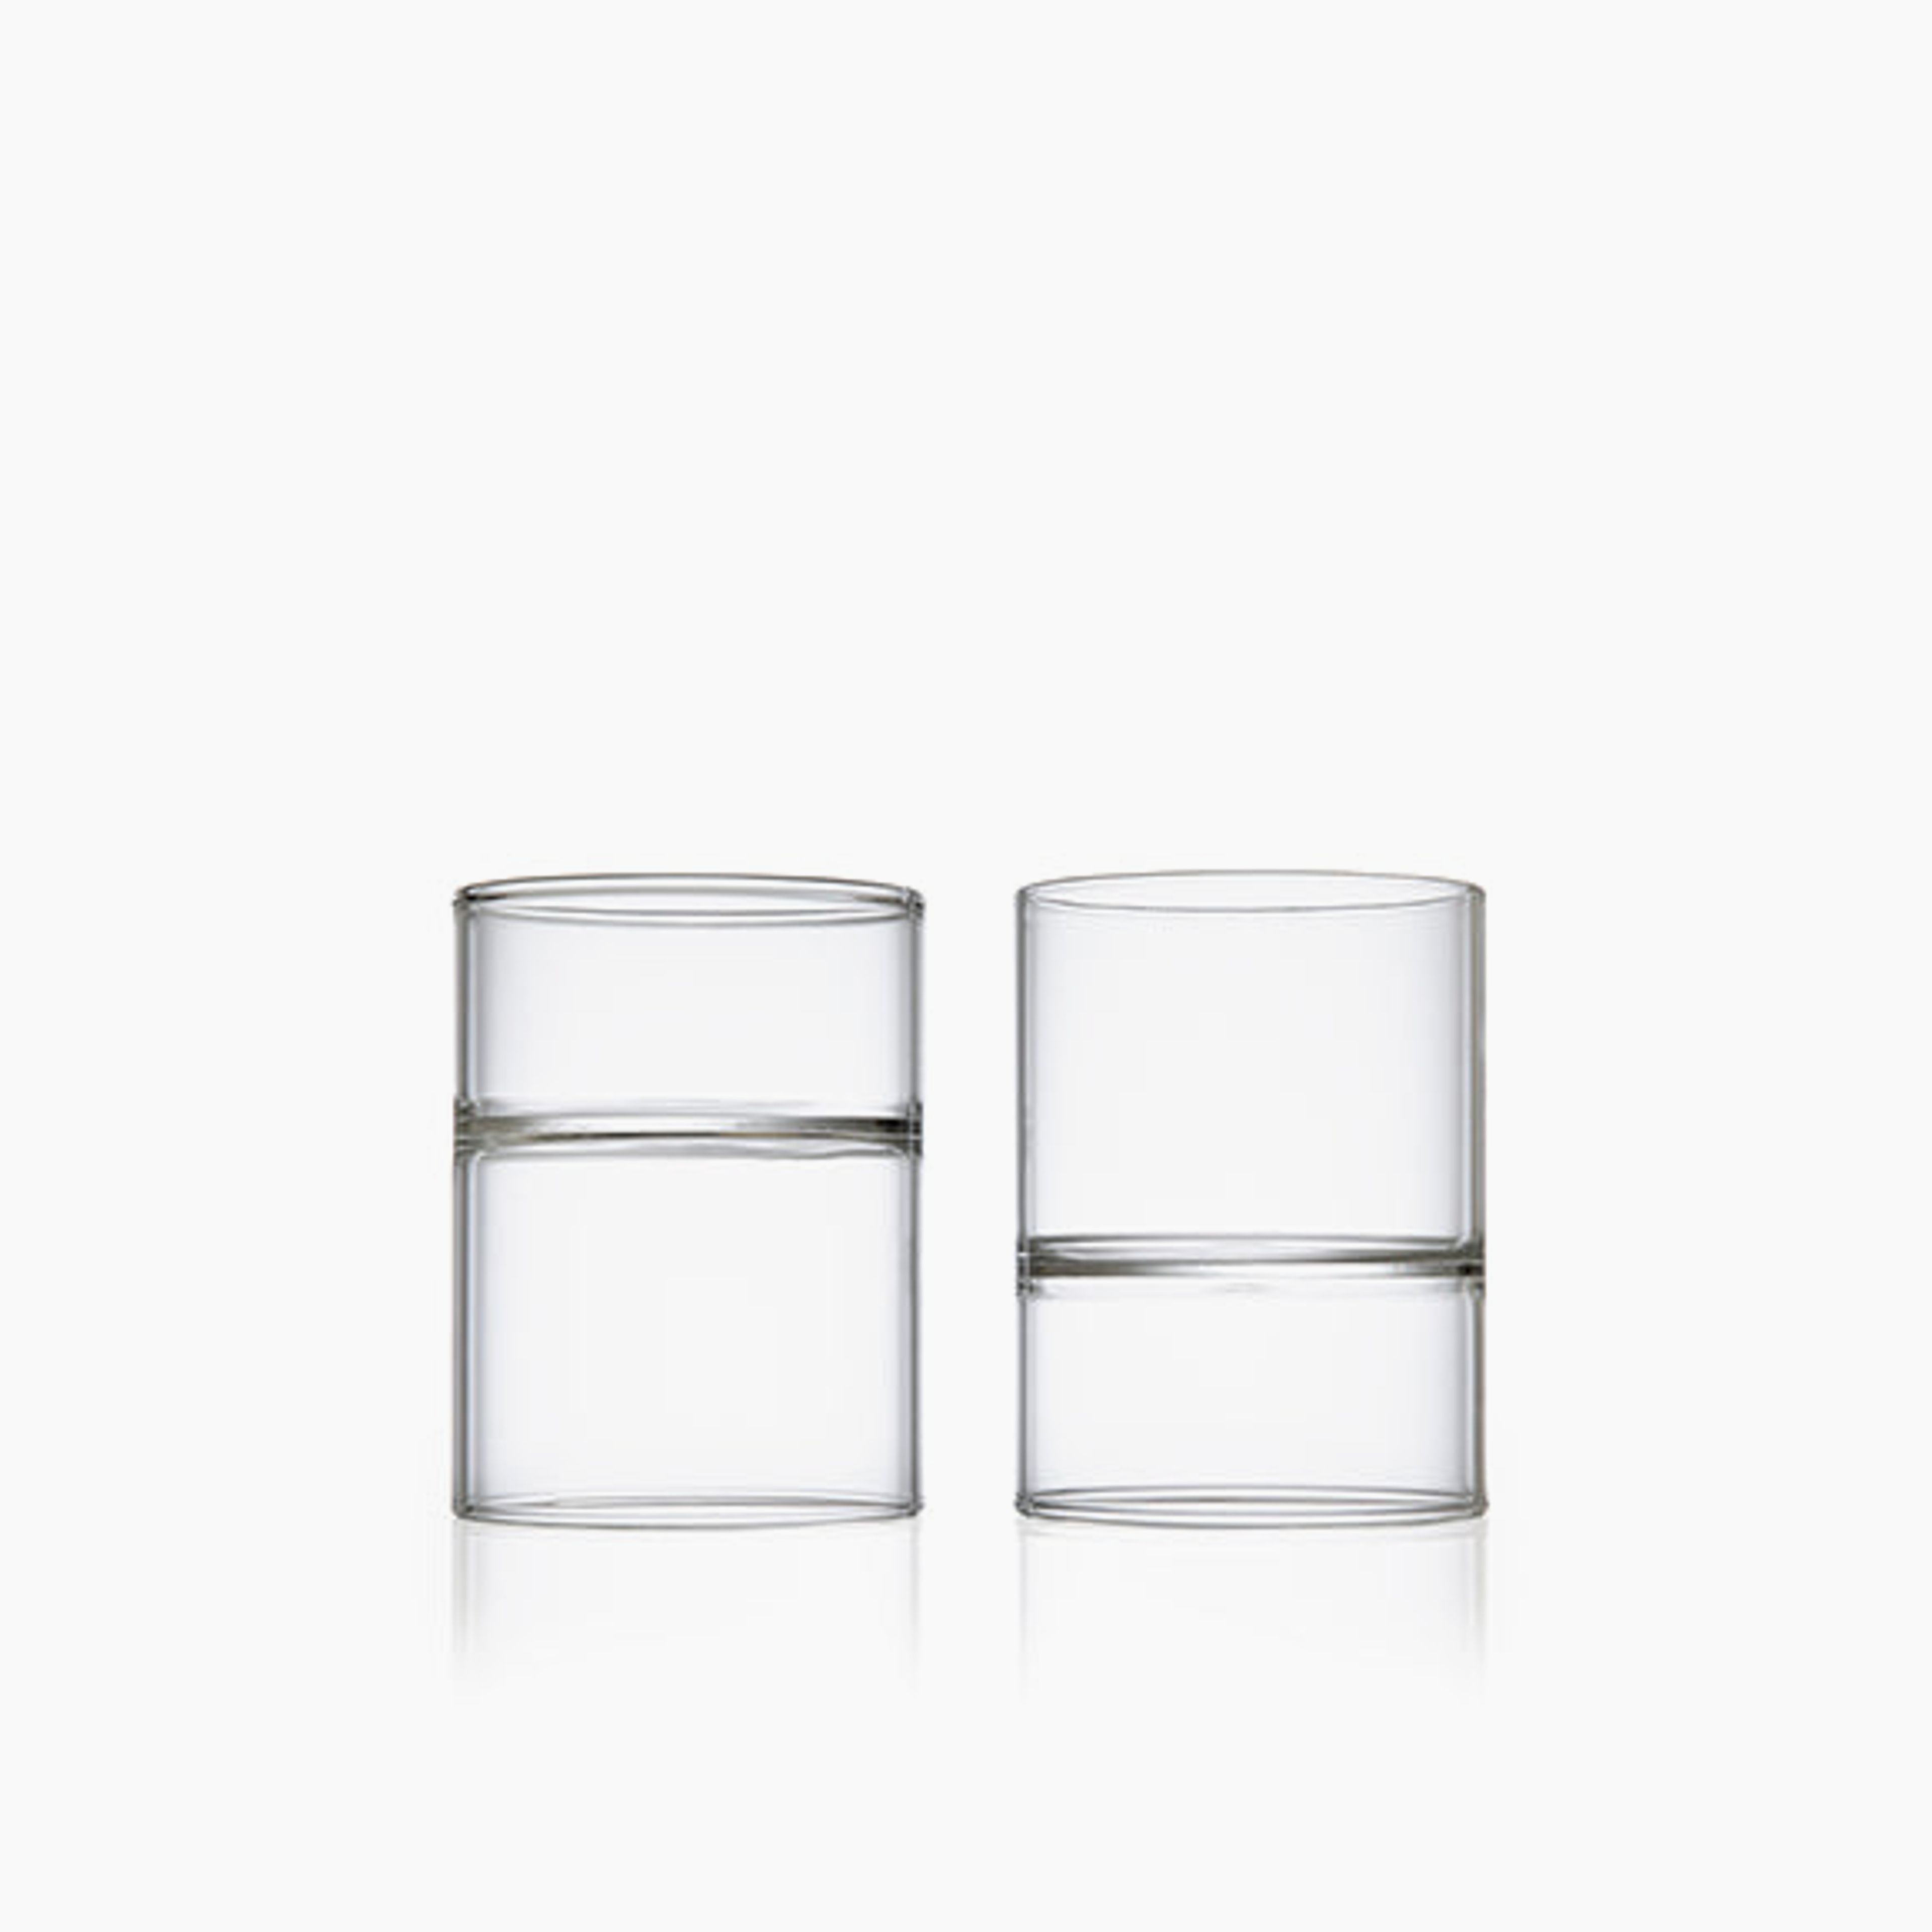 Revolution Rocks / Martini Glass - Set of 2